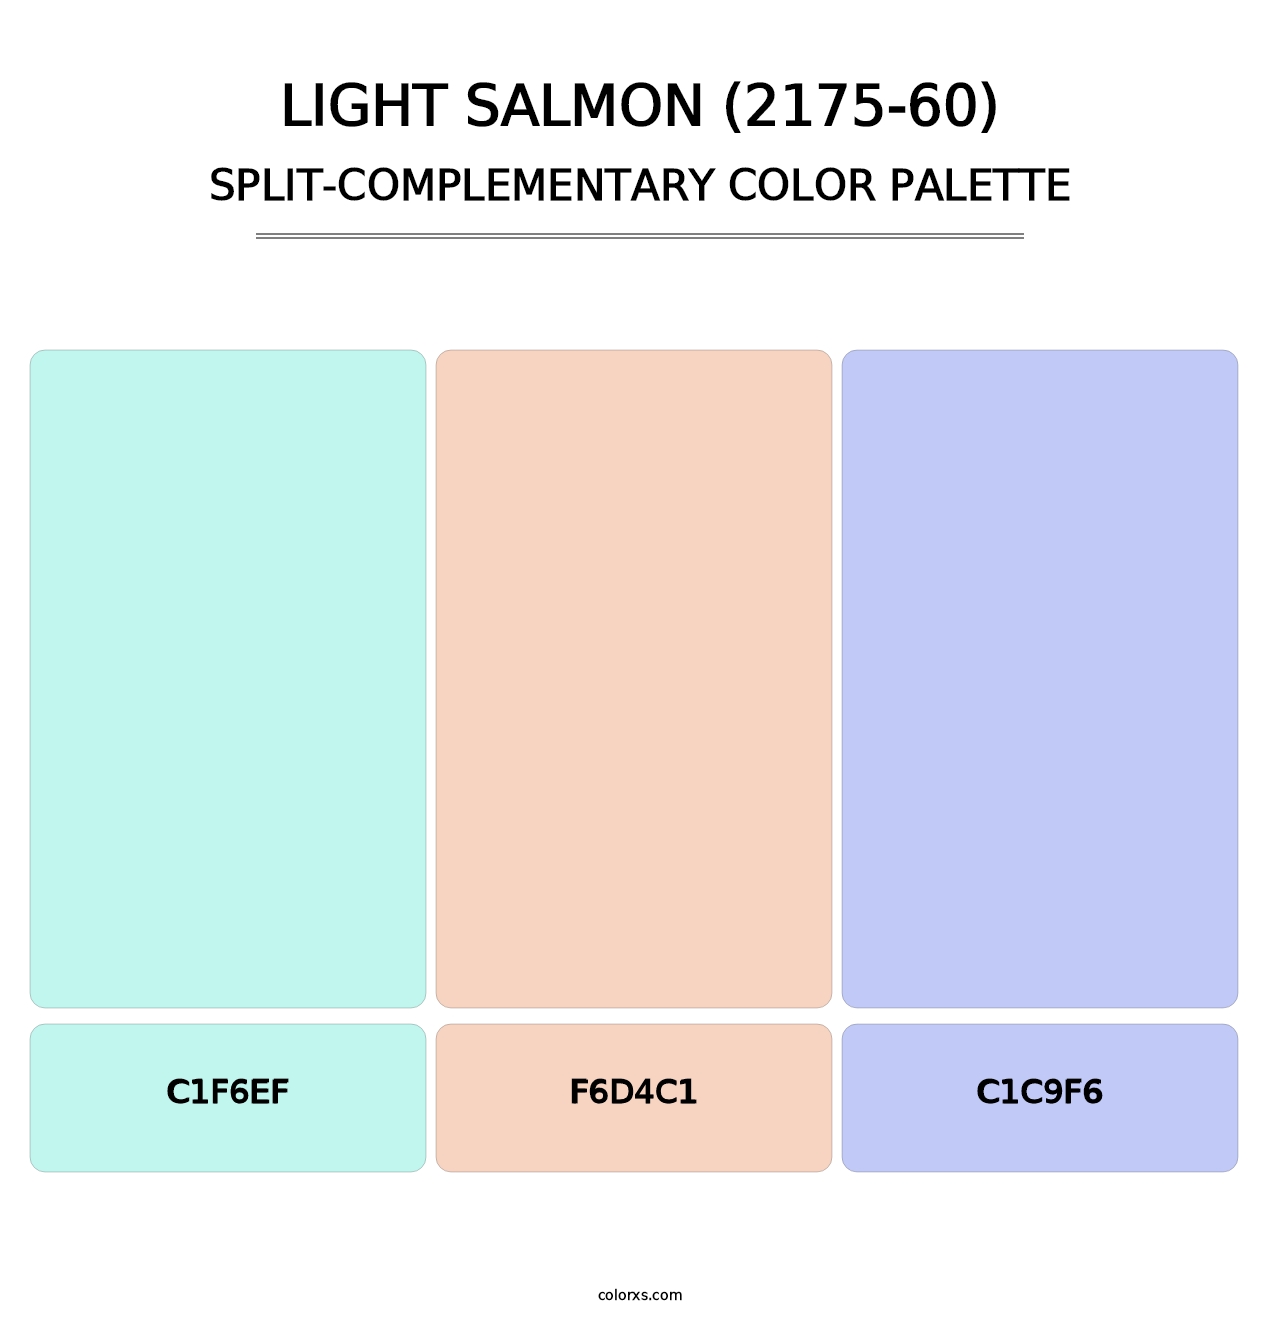 Light Salmon (2175-60) - Split-Complementary Color Palette